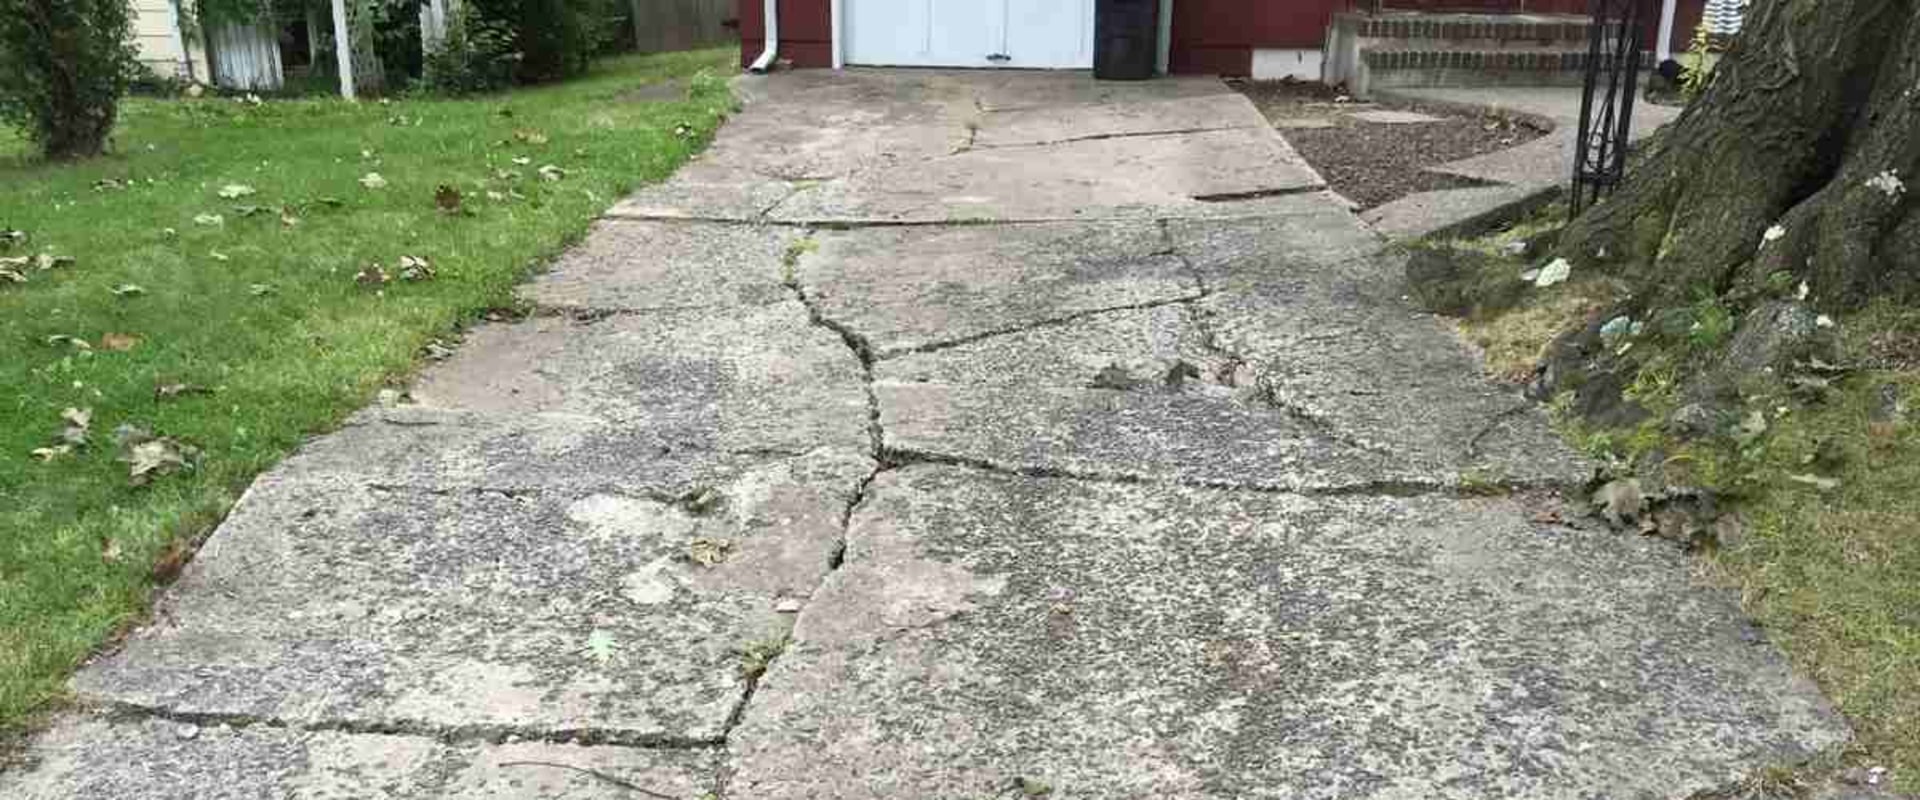 Can you repair crumbling concrete steps?